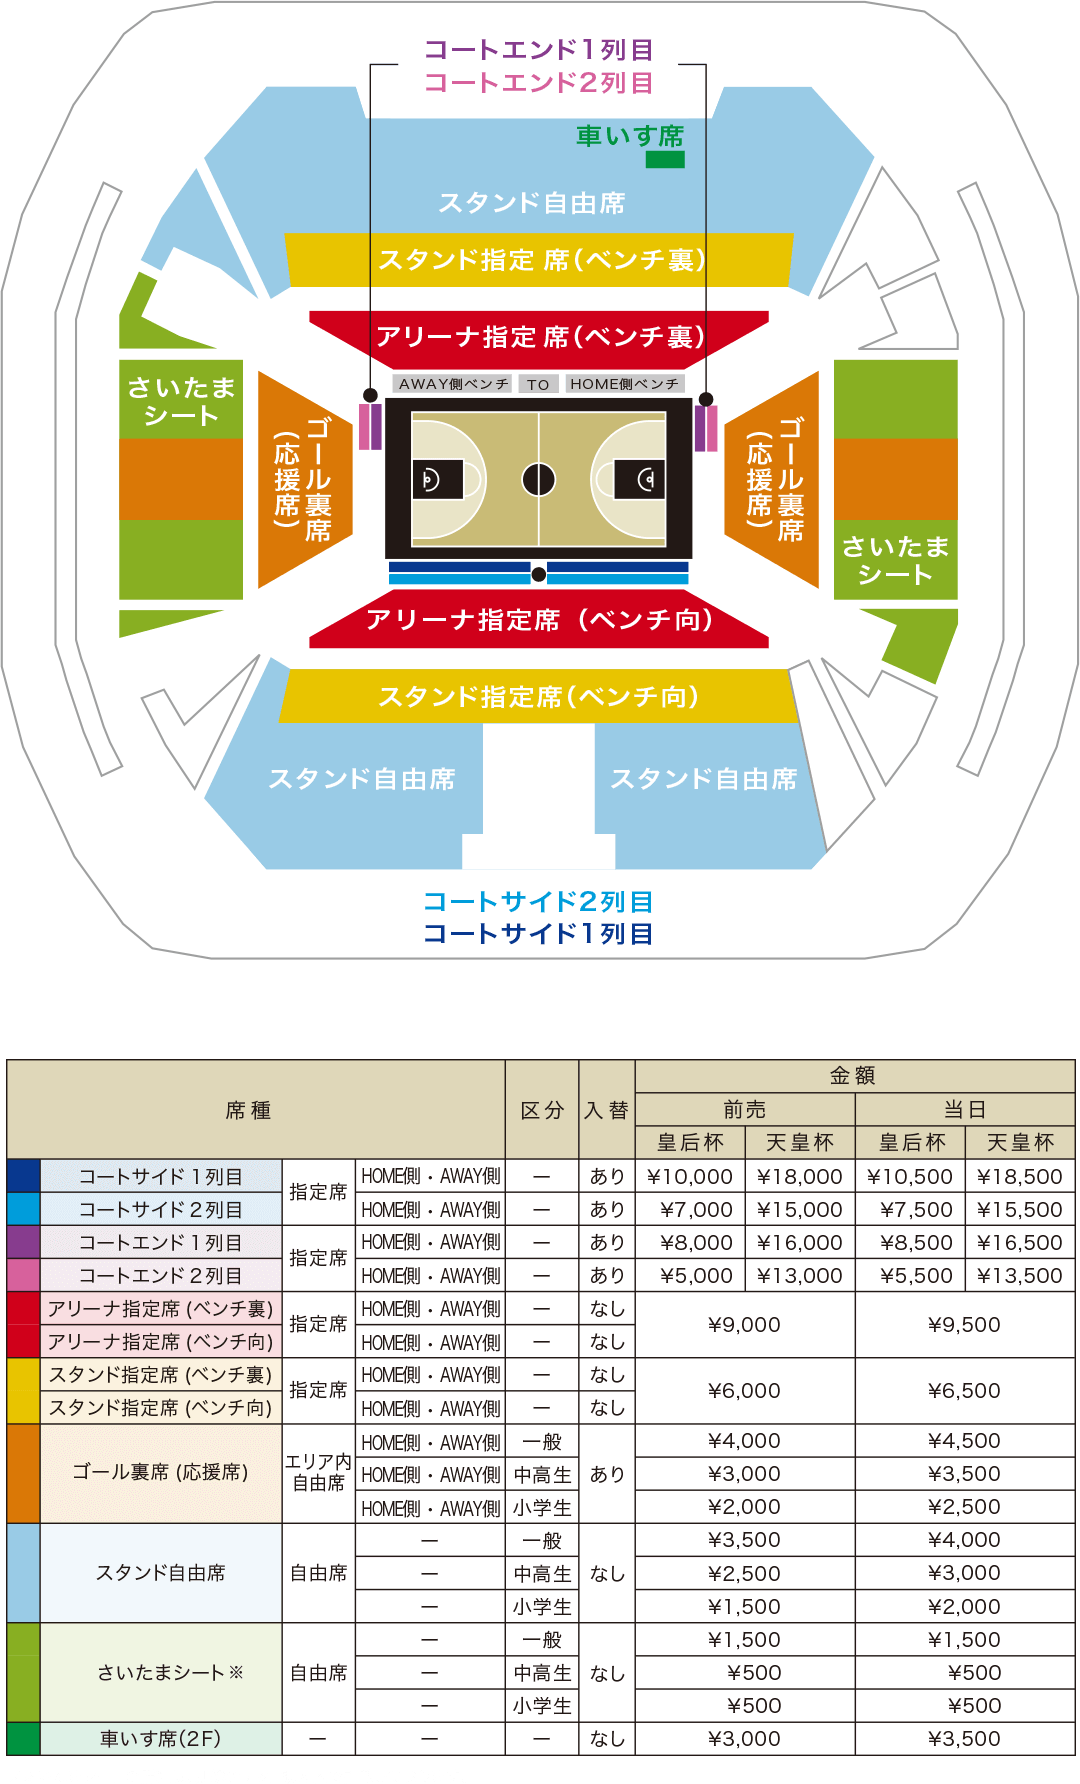 2020.1.12(SUN)の座席表·価格表